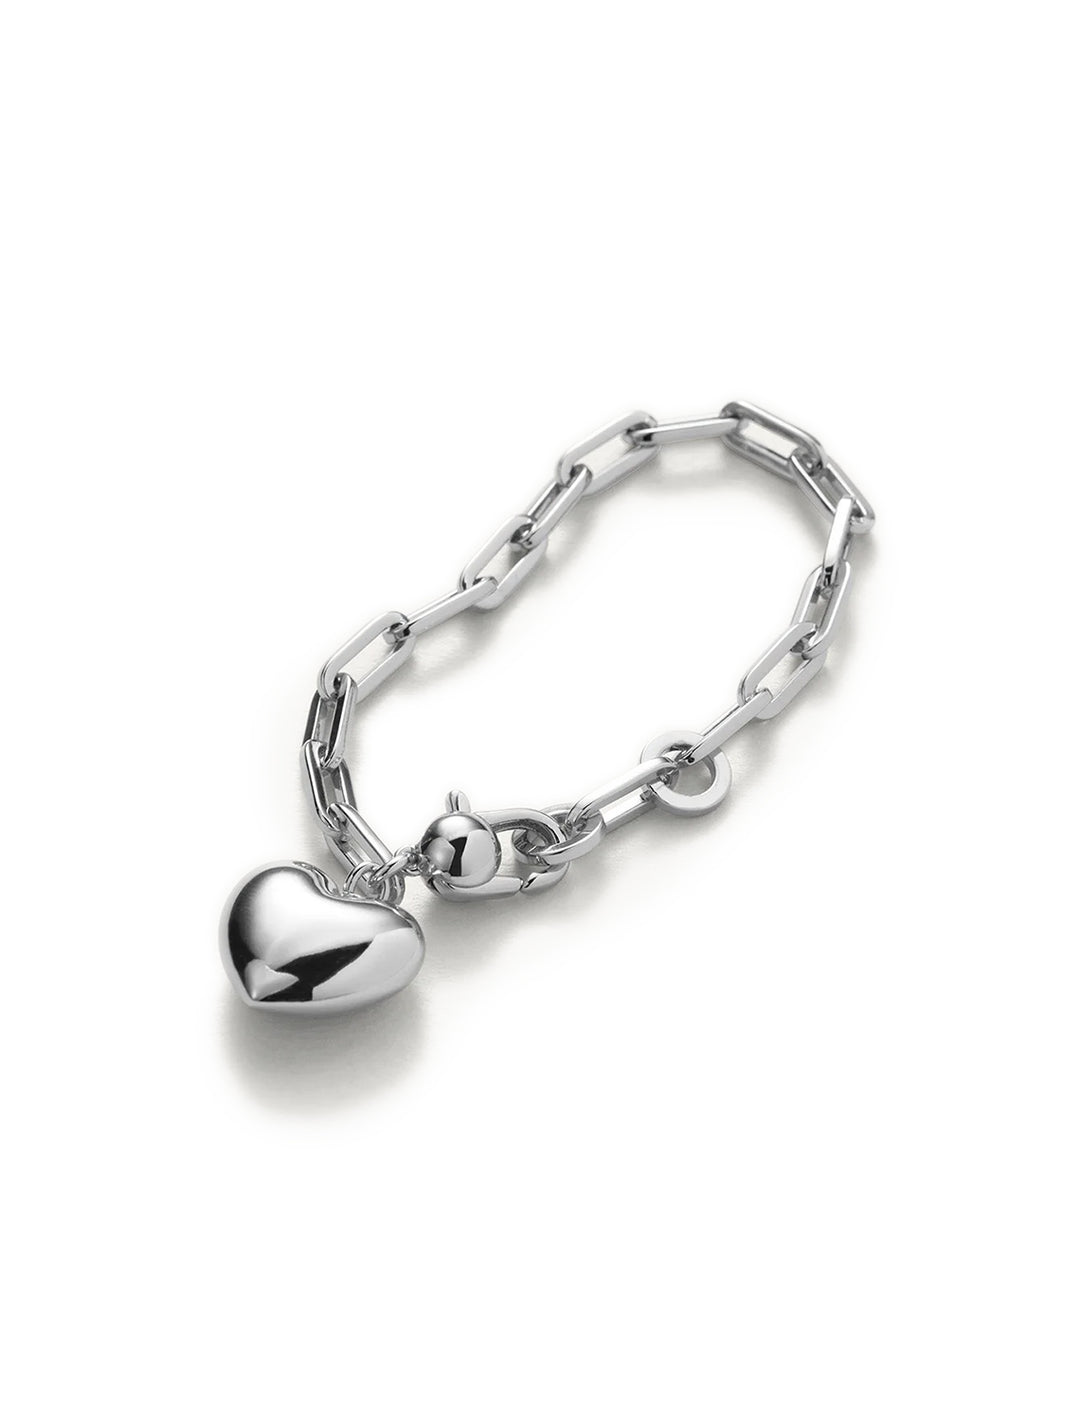 Overhead view of Jenny Bird's puffy heart chain bracelet in silver.